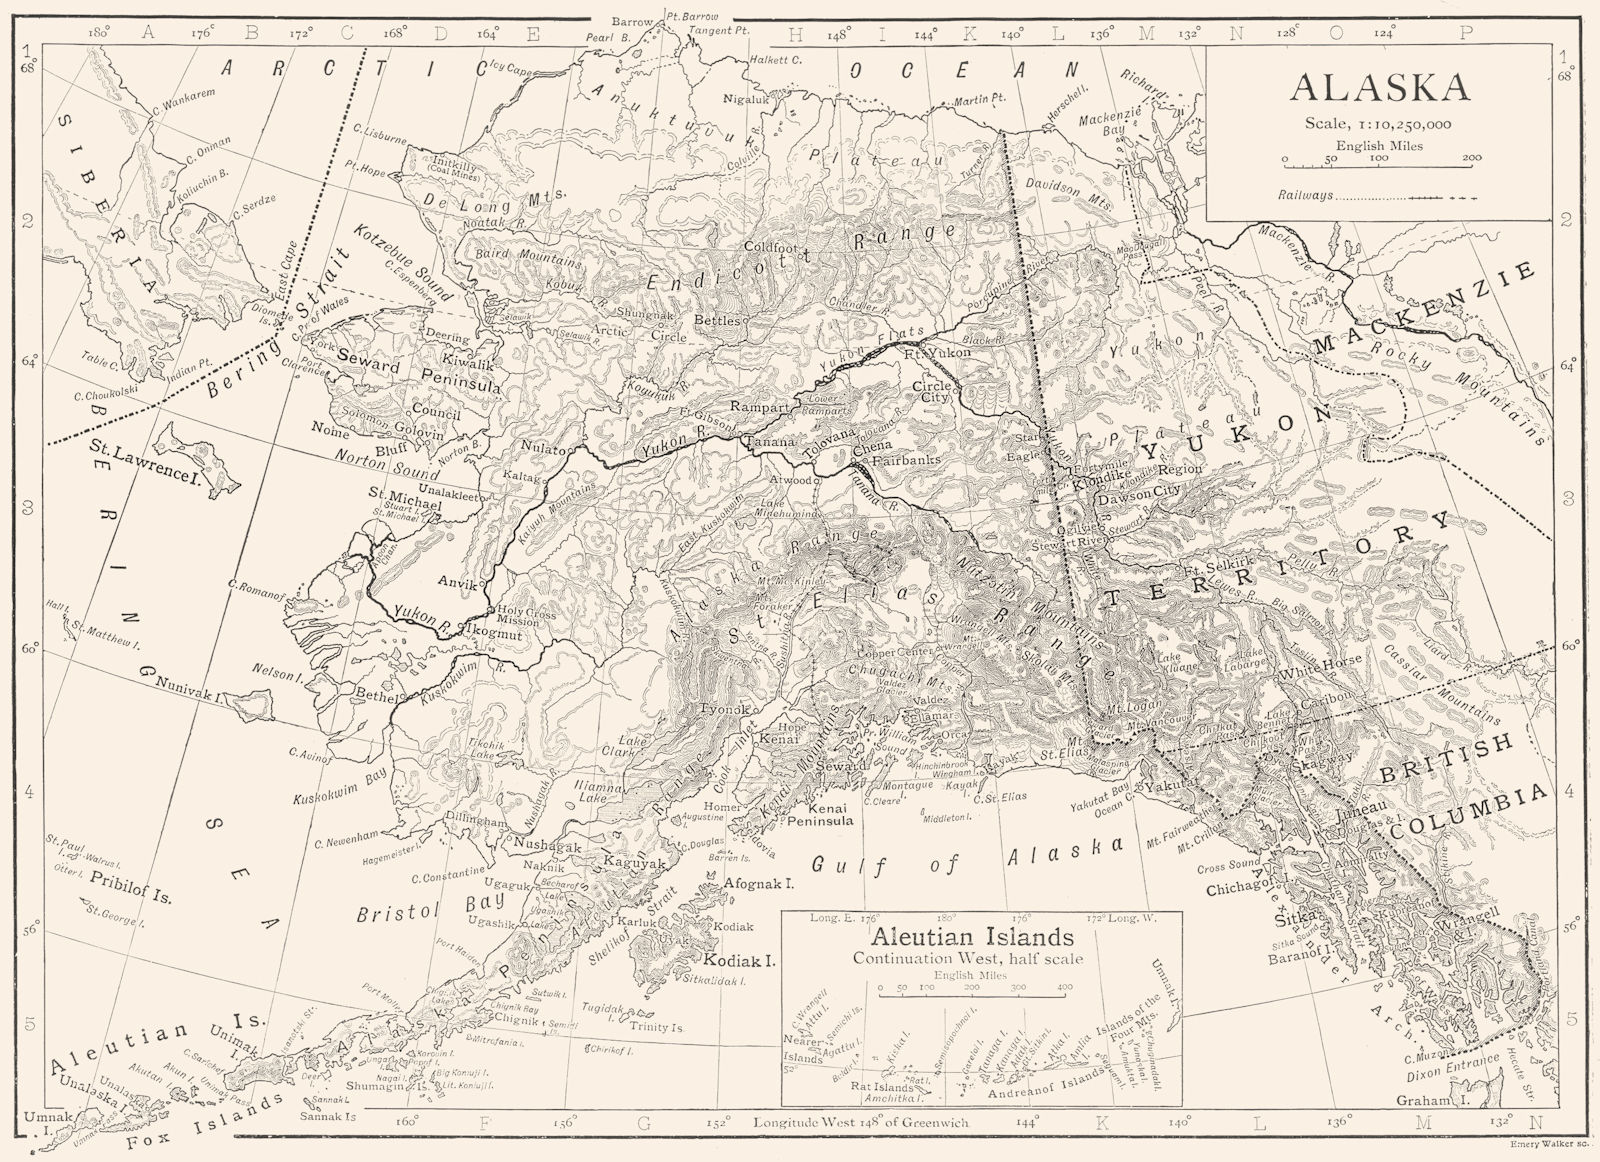 Associate Product ALASKA. Alaska; Inset map of Aleutian Islands 1910 old antique plan chart